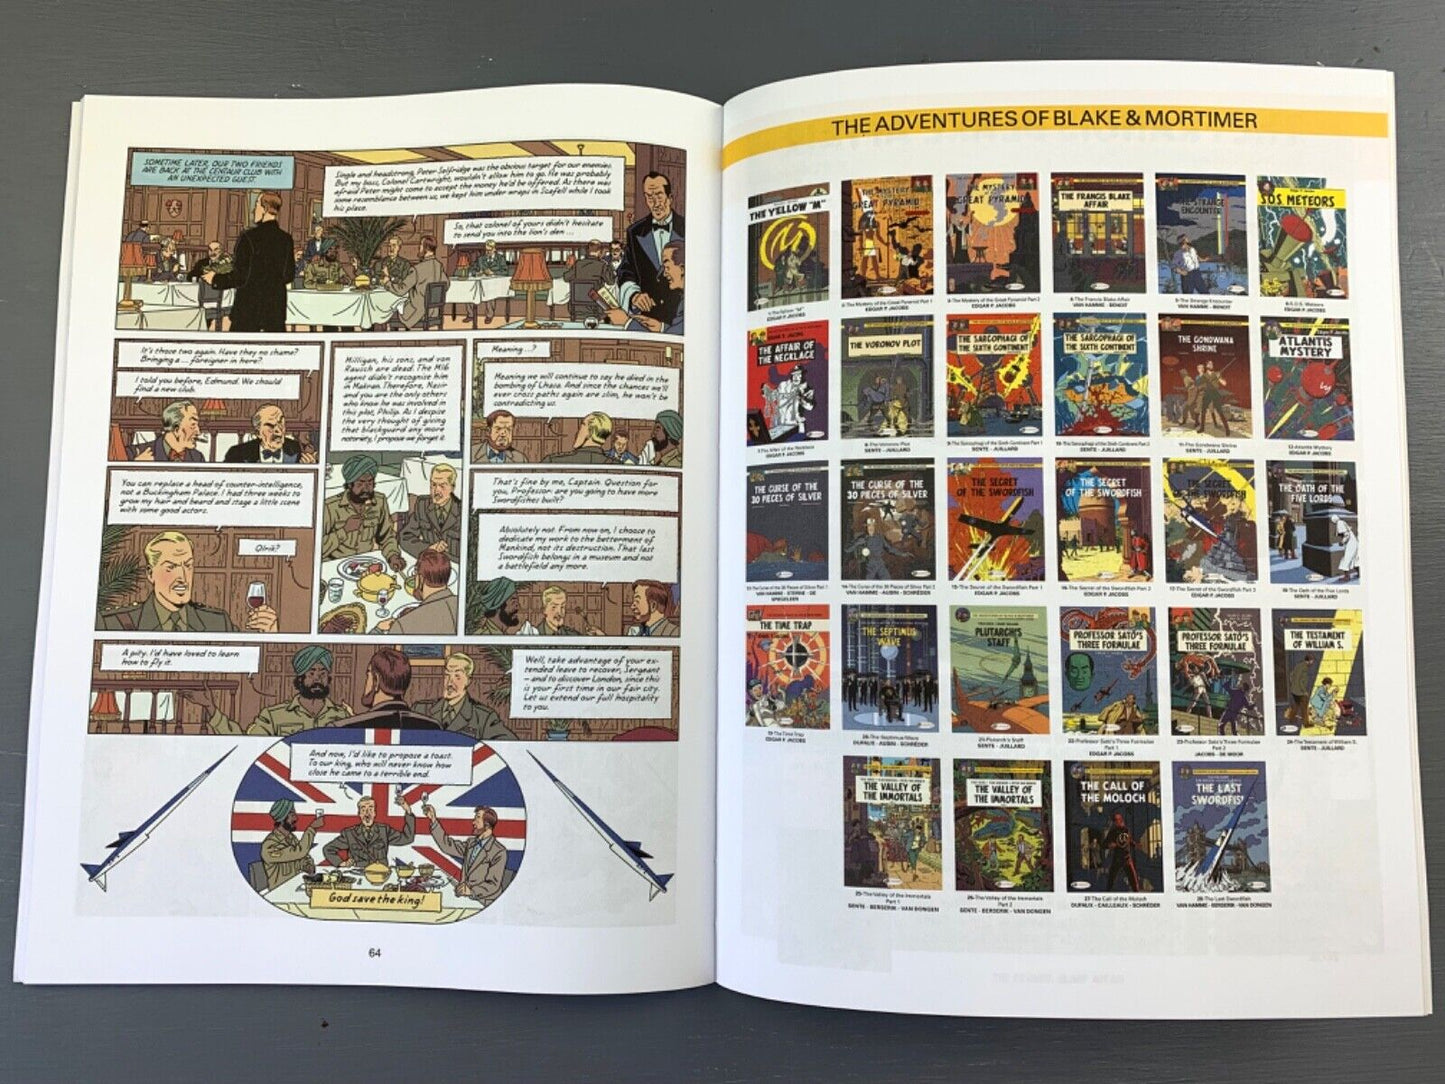 The Last Swordfish - Blake & Mortimer Comic Volume 28 - Cinebook UK Paperback Edition